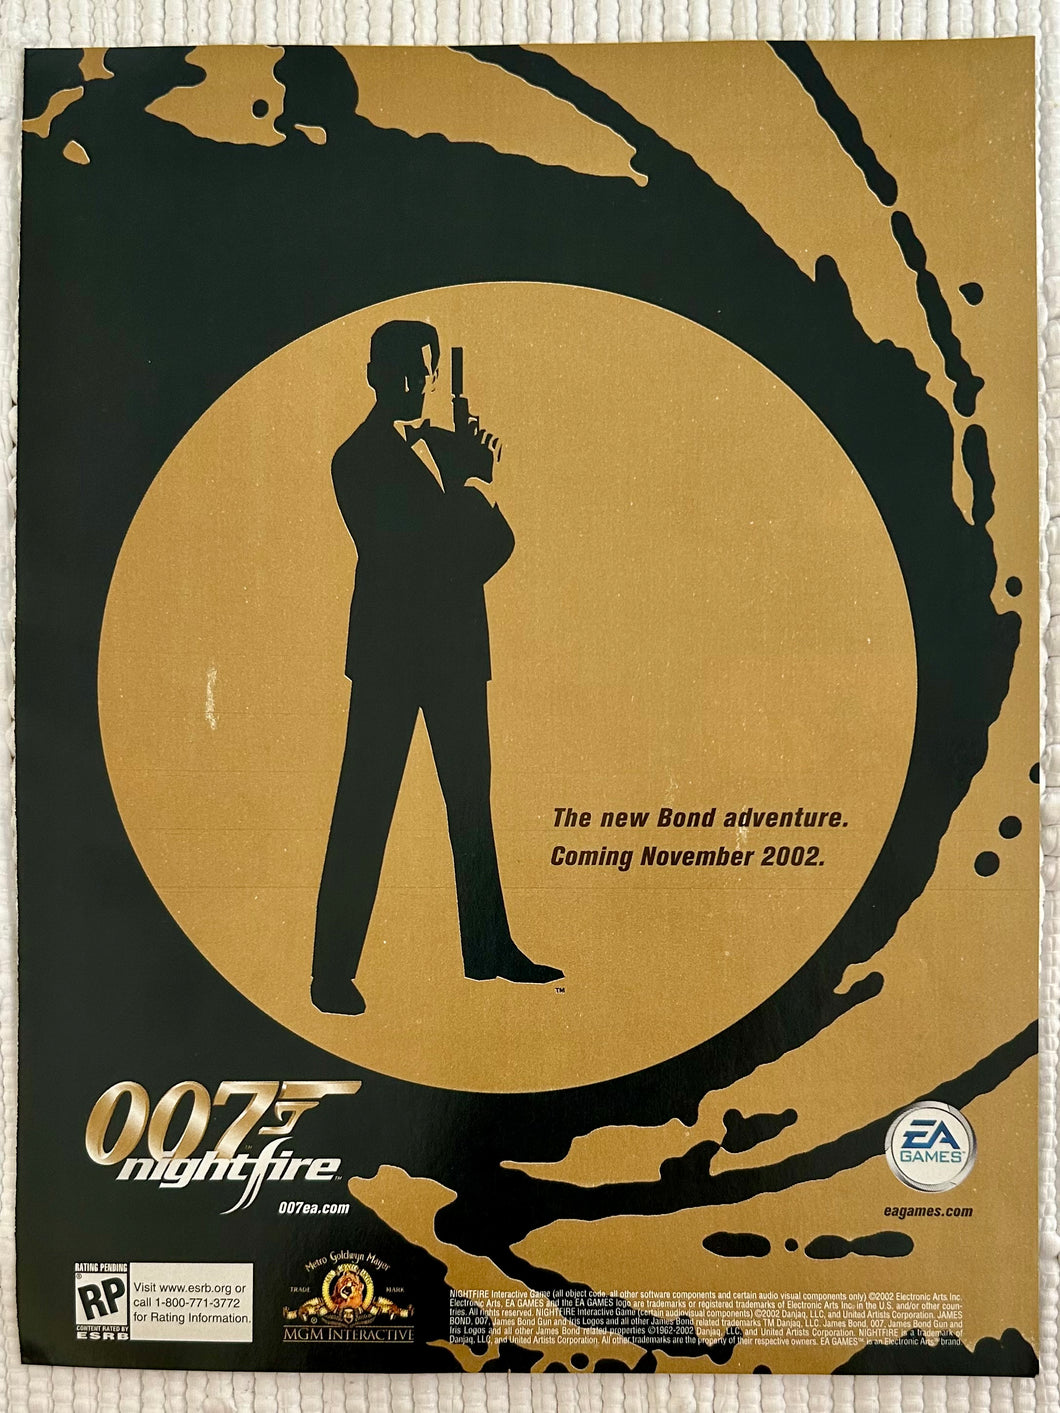 James Bond 007: Nightfire - PS2 NGC Xbox PC - Original Vintage Advertisement - Print Ads - Laminated A4 Poster